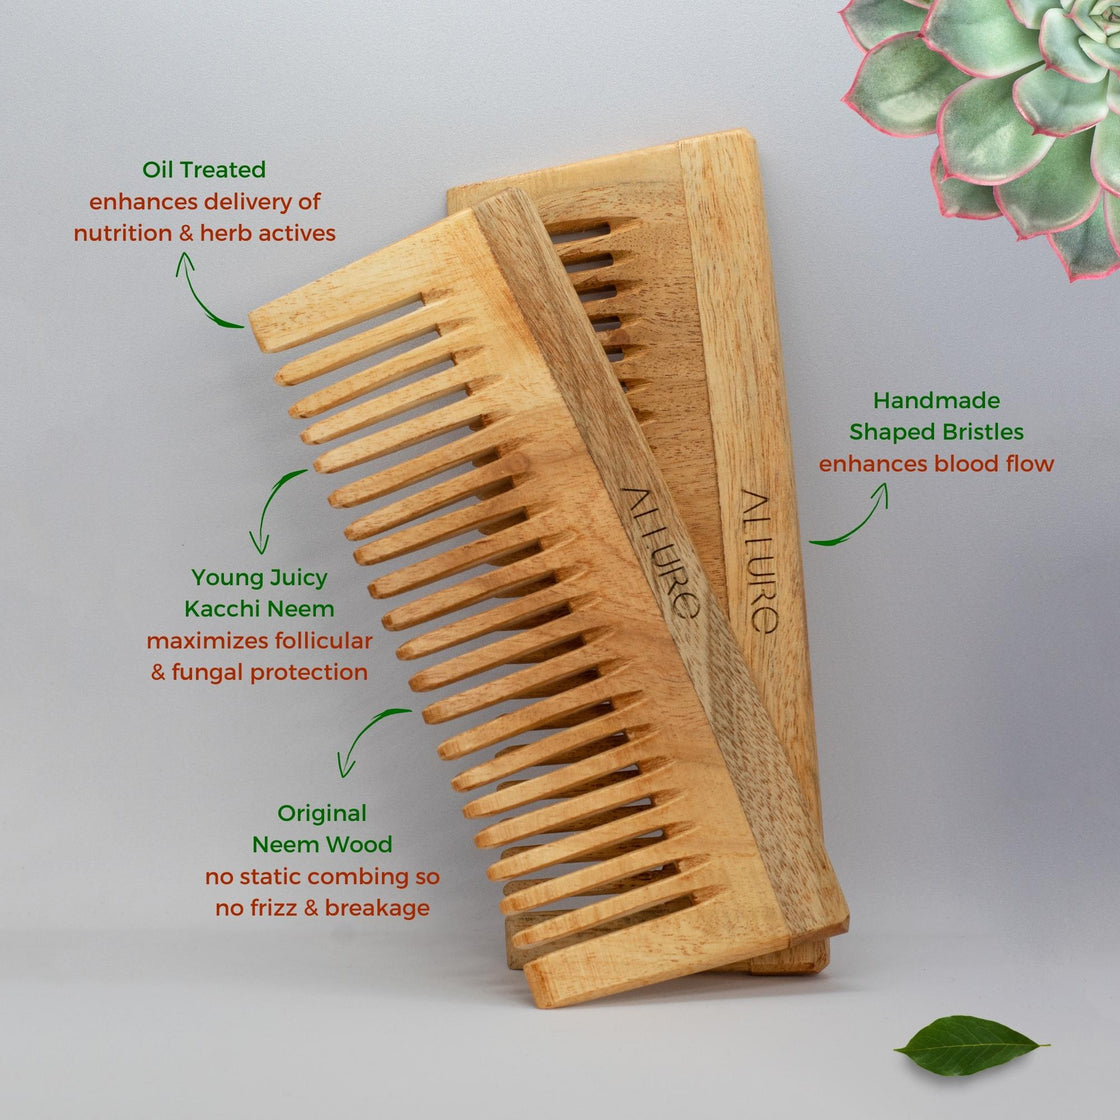 Allure Neem Wood Pack of 2 Shampoo Hair Combs (CS-01)